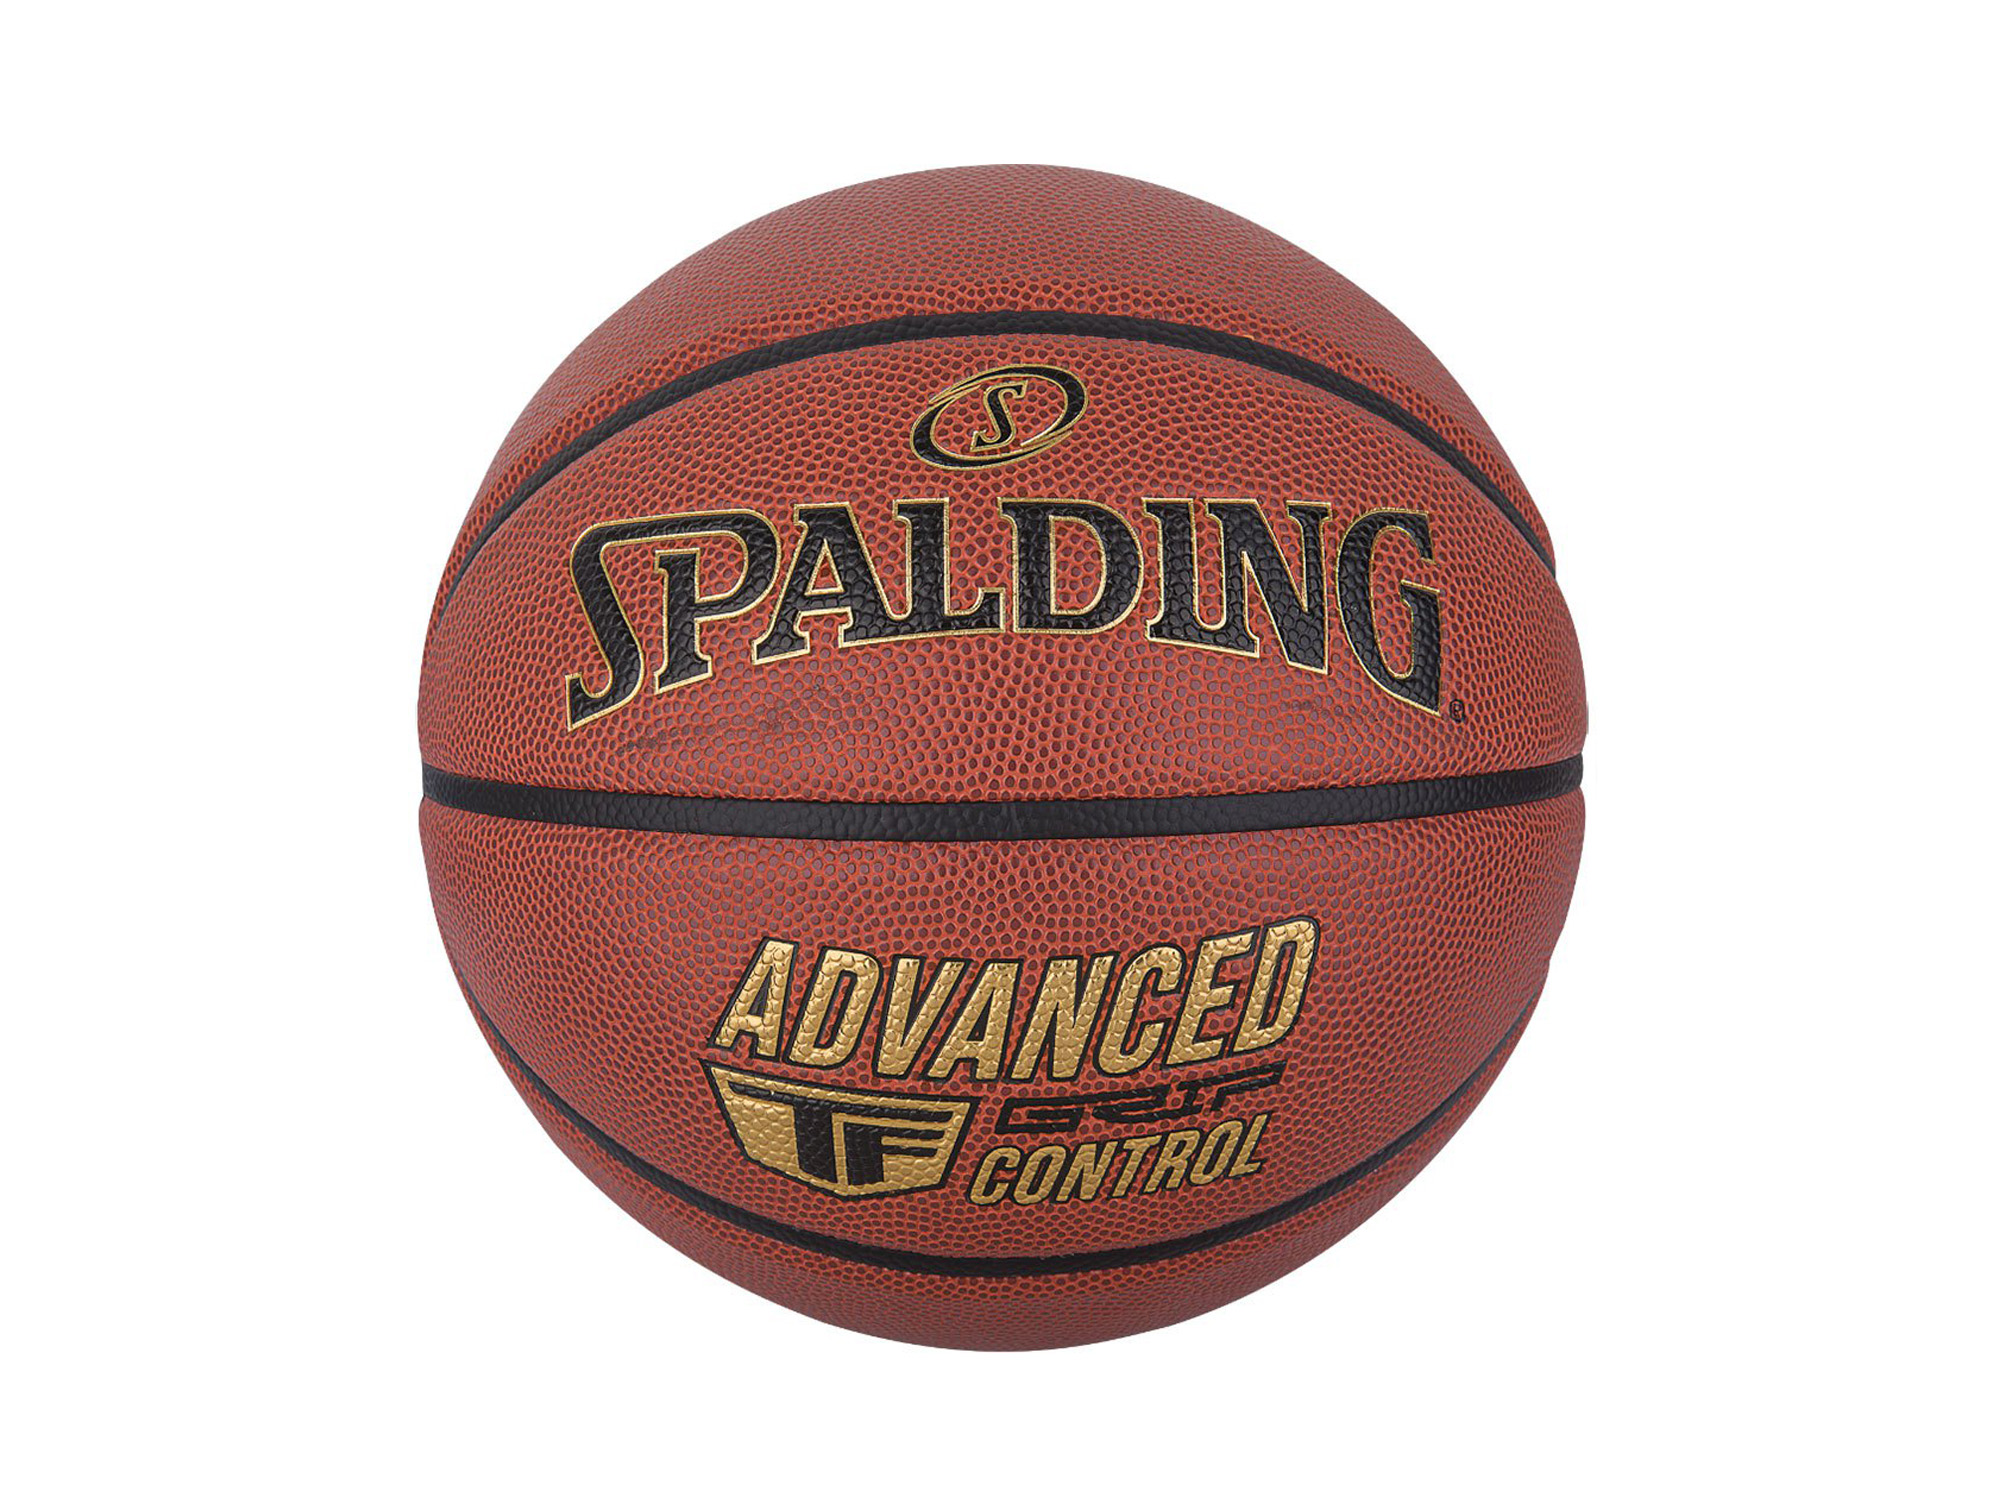 Spalding Advanced Grip Control Basketball